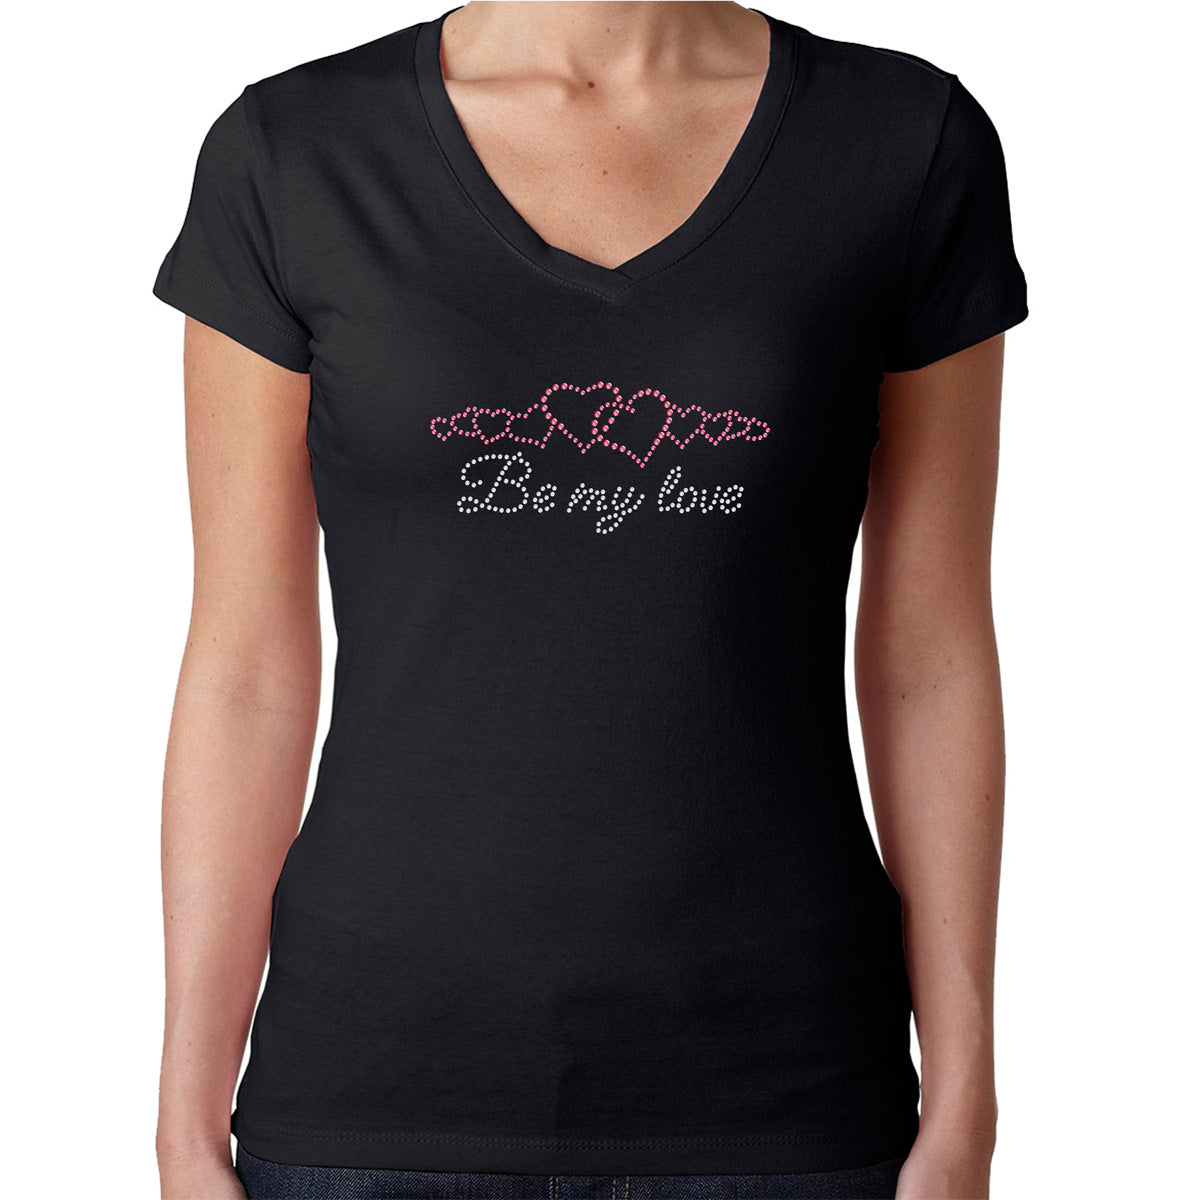 Womens T-Shirt Rhinestone Bling Black Fitted Tee Be my Love Pink Heart Valentine